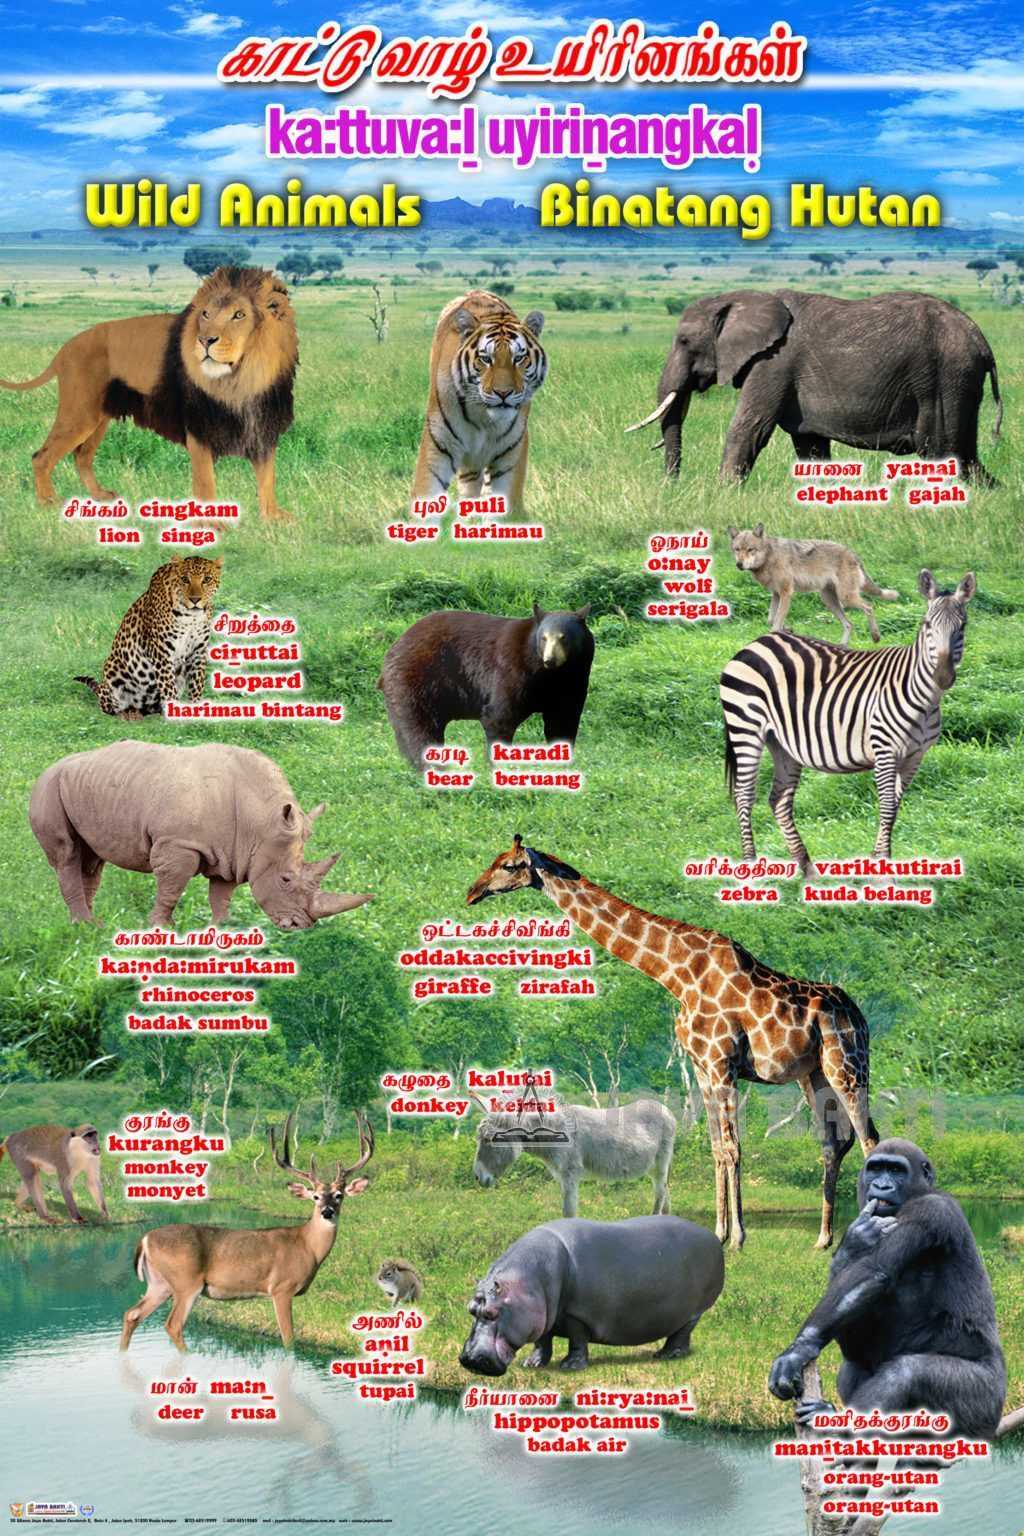 Wild Animals Chart - Jaya Bakti